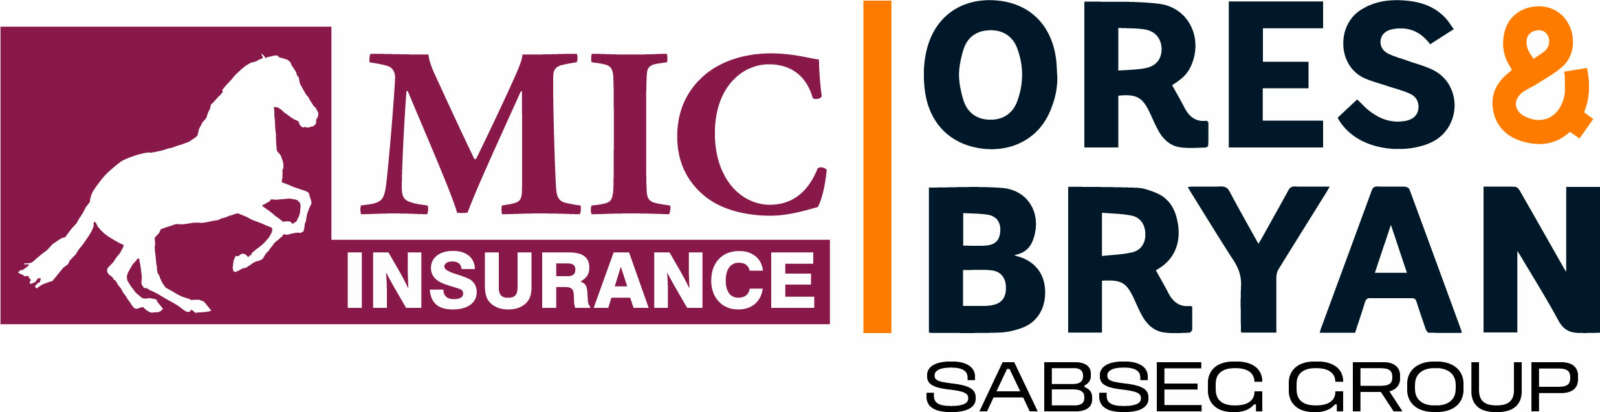 Ores & Bryan | MIC Insurance